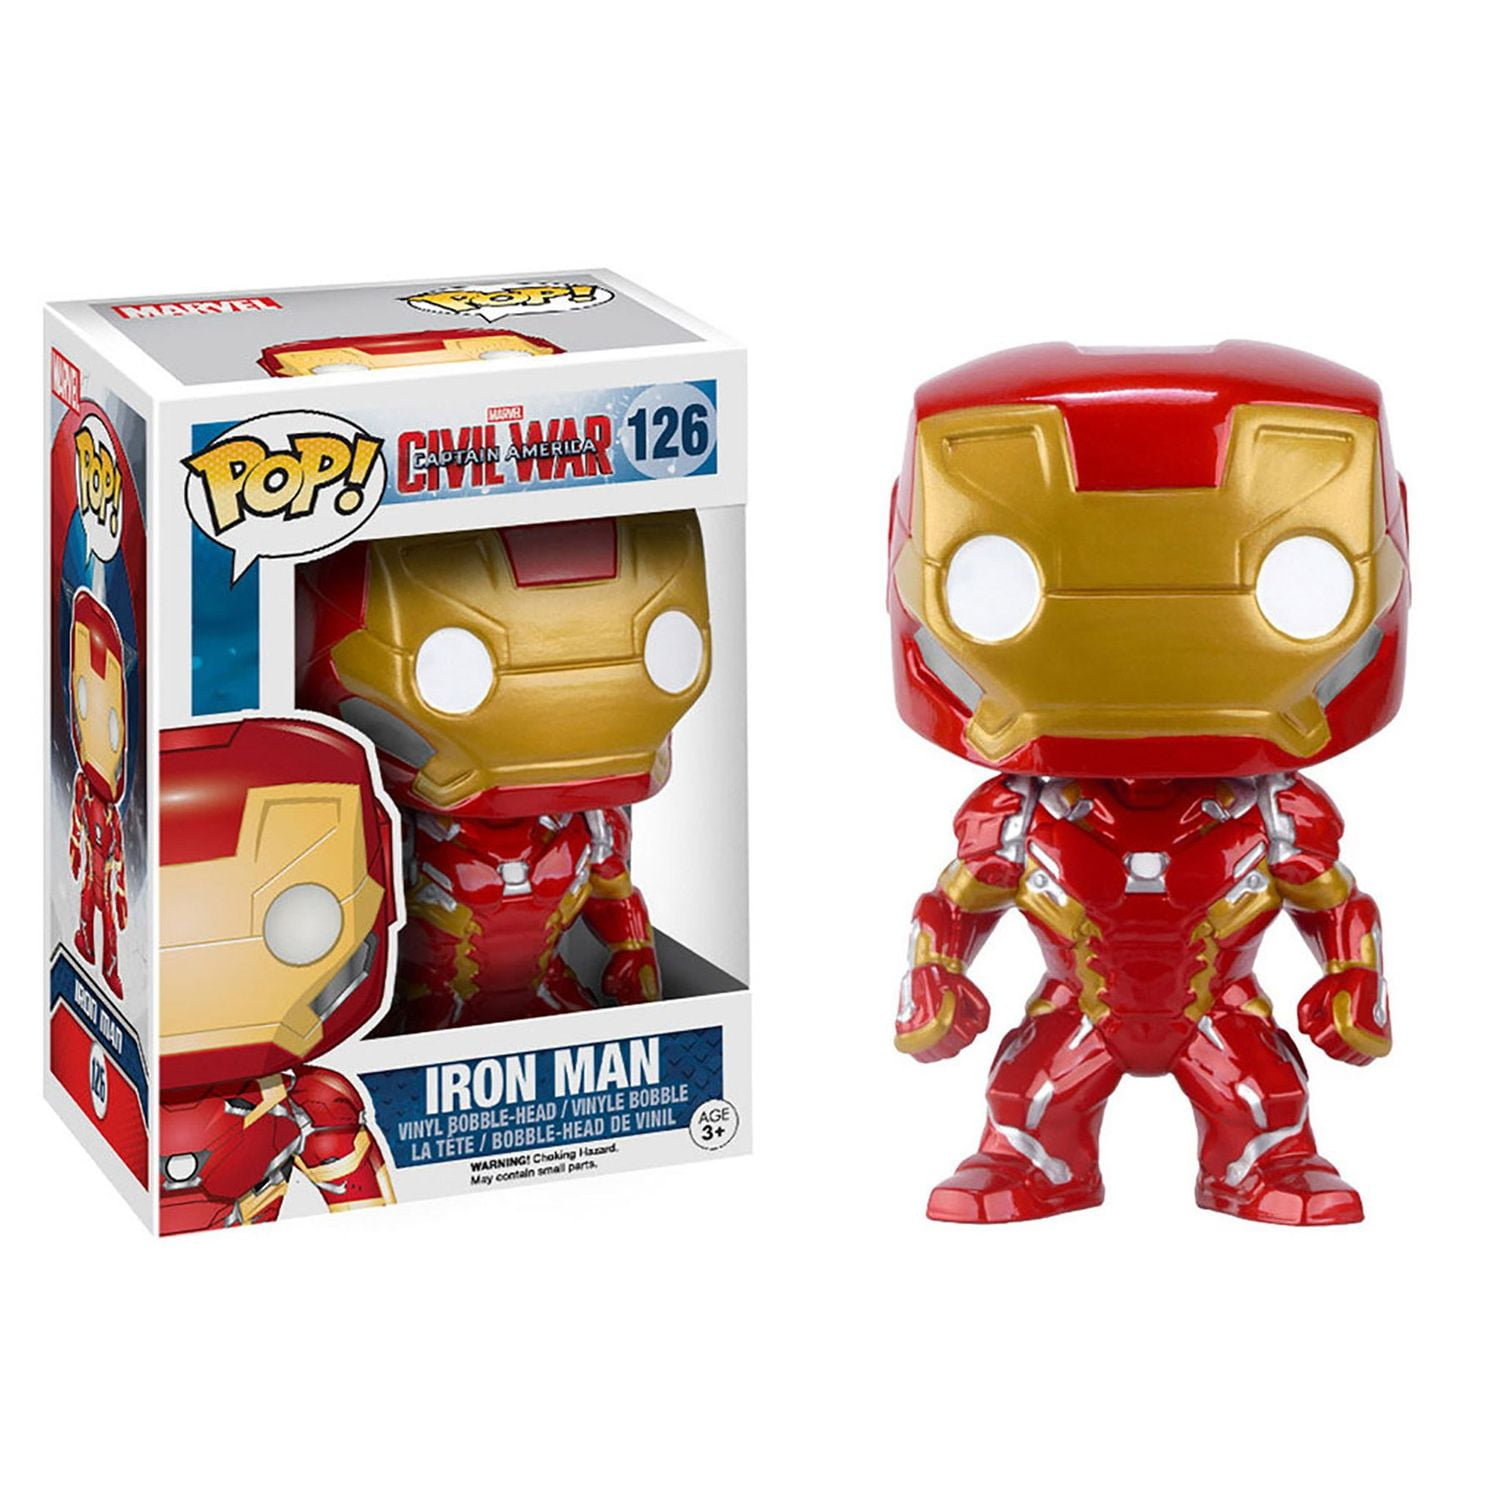 Funko Pop Marvel Civil War   Iron Man Vinyl Figure